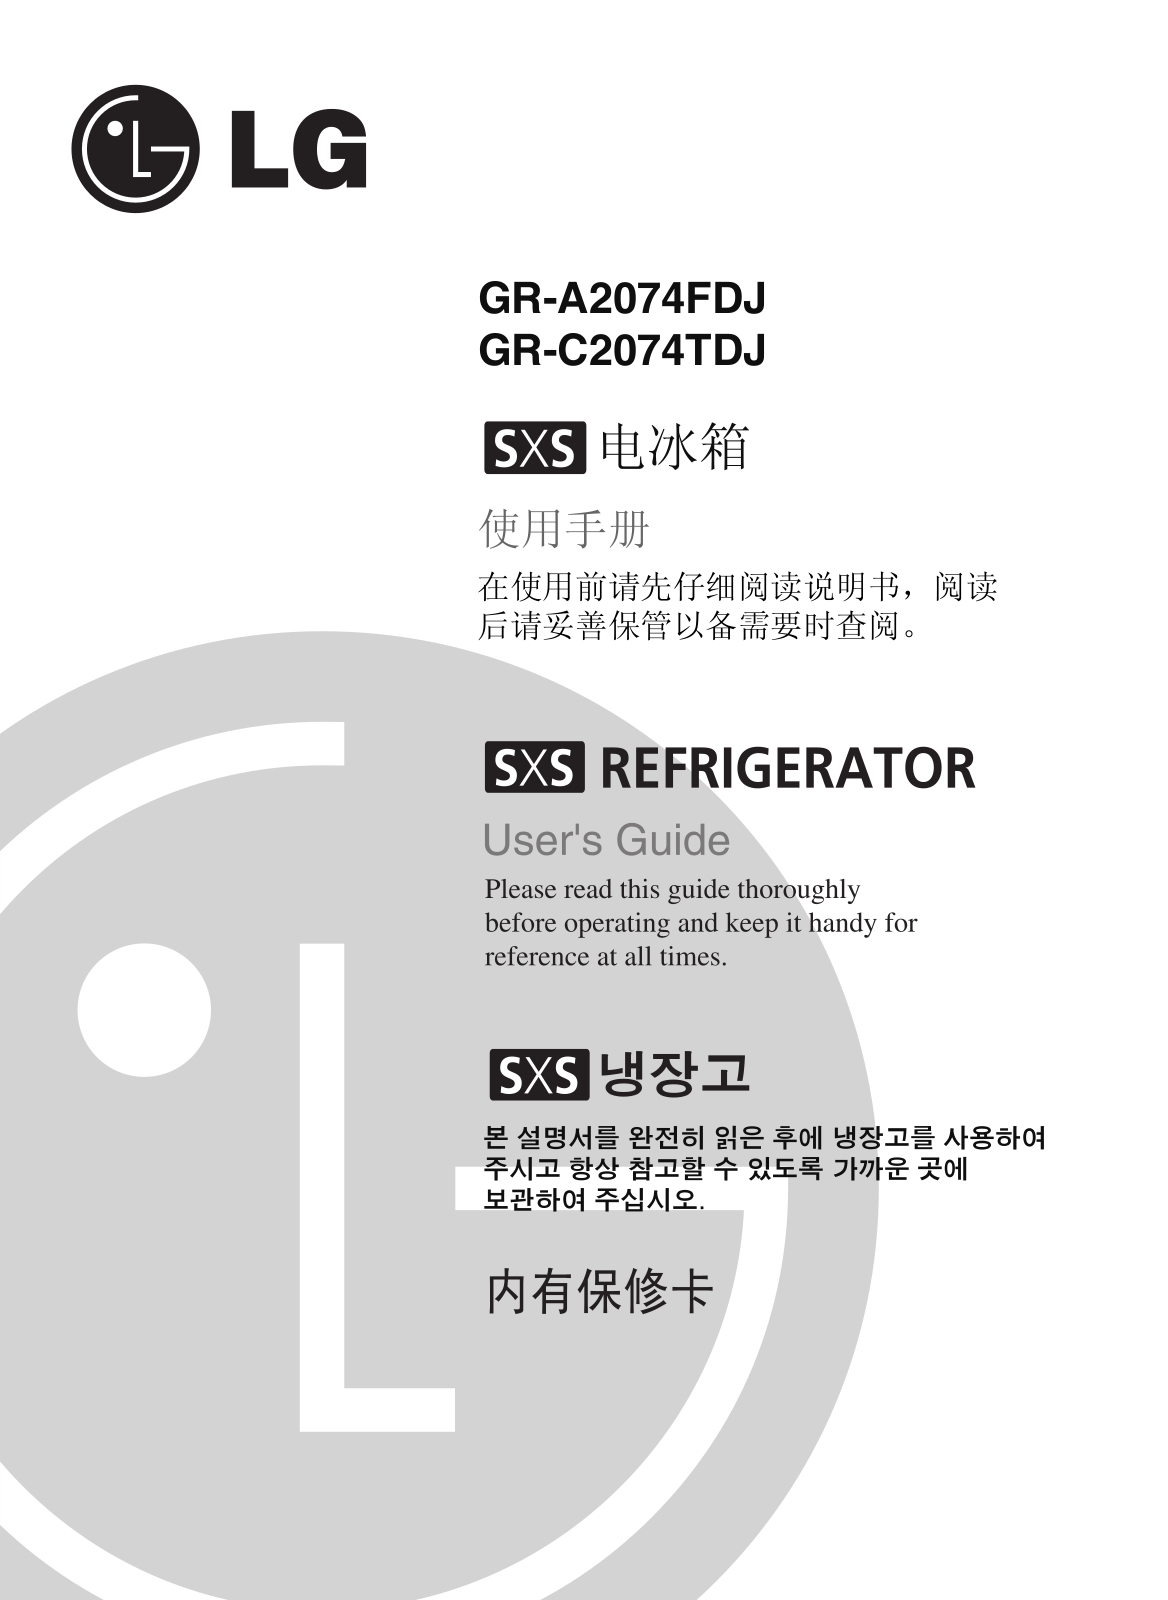 LG GR-A2074FDJ, GR-C2074TDJ User Manual